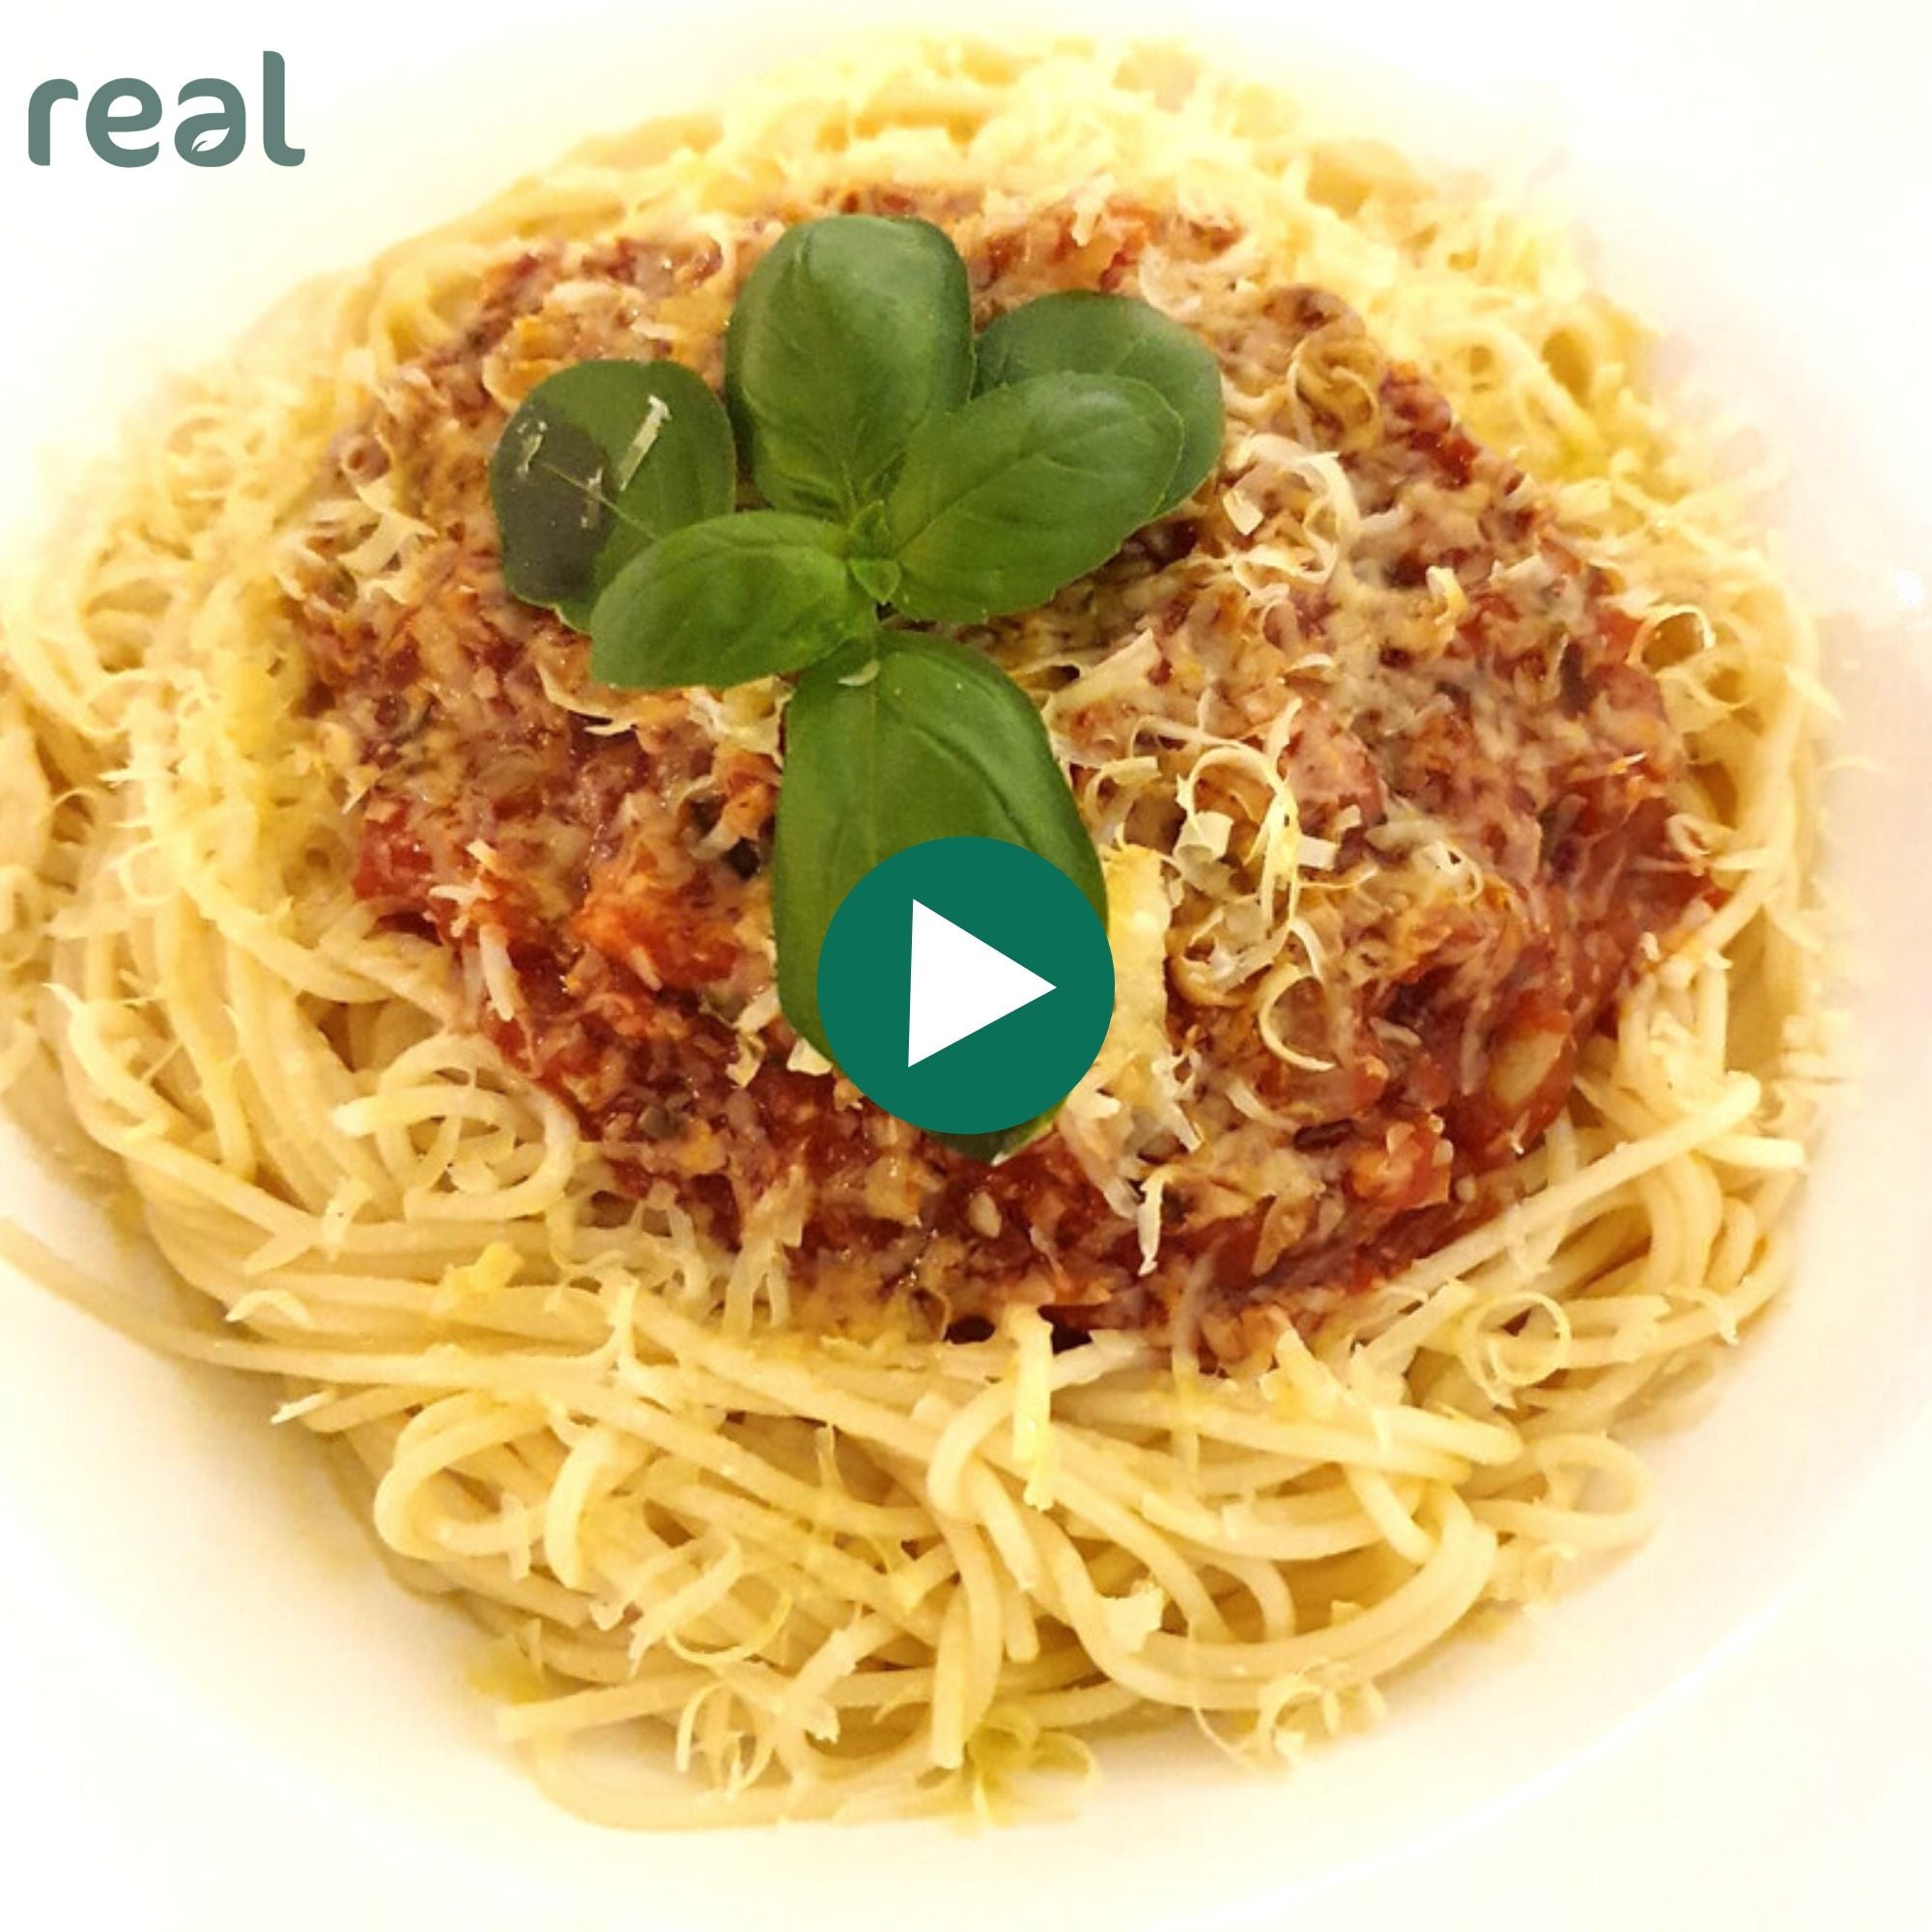 Tomato, Bacon & Italian Sausage Spaghetti